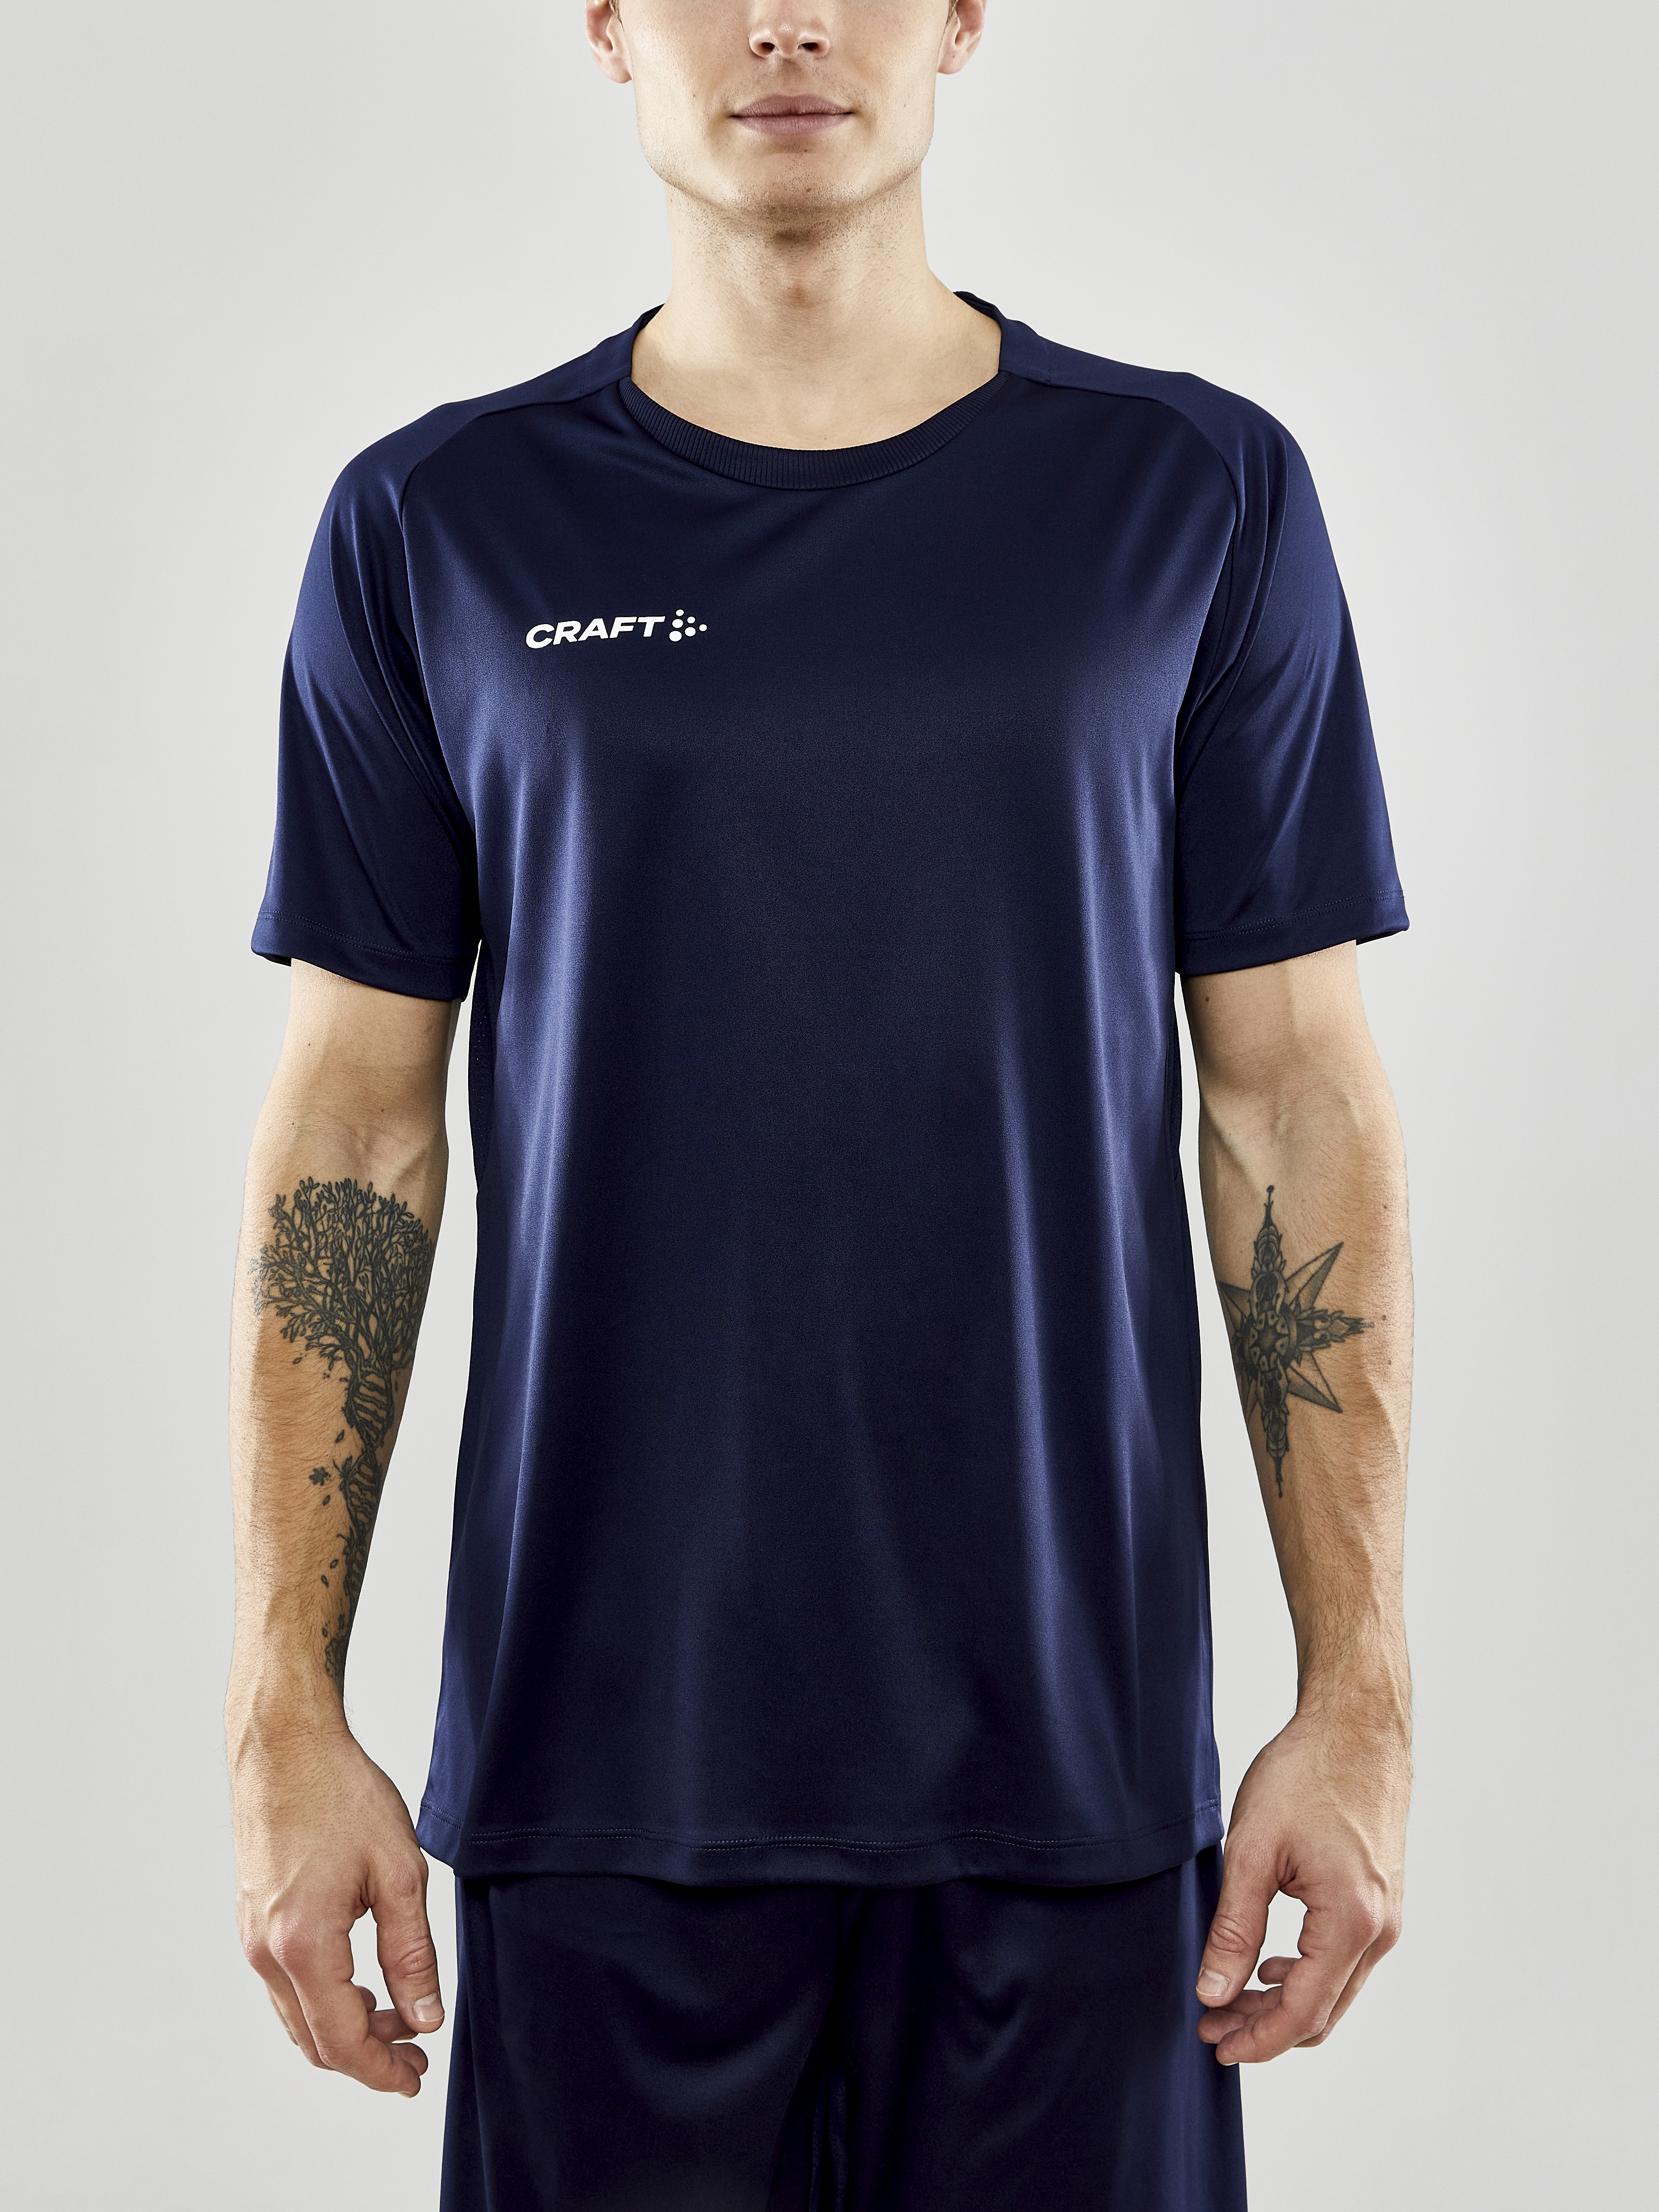 Evolve Tee | M - Sportswear Navy blue Craft